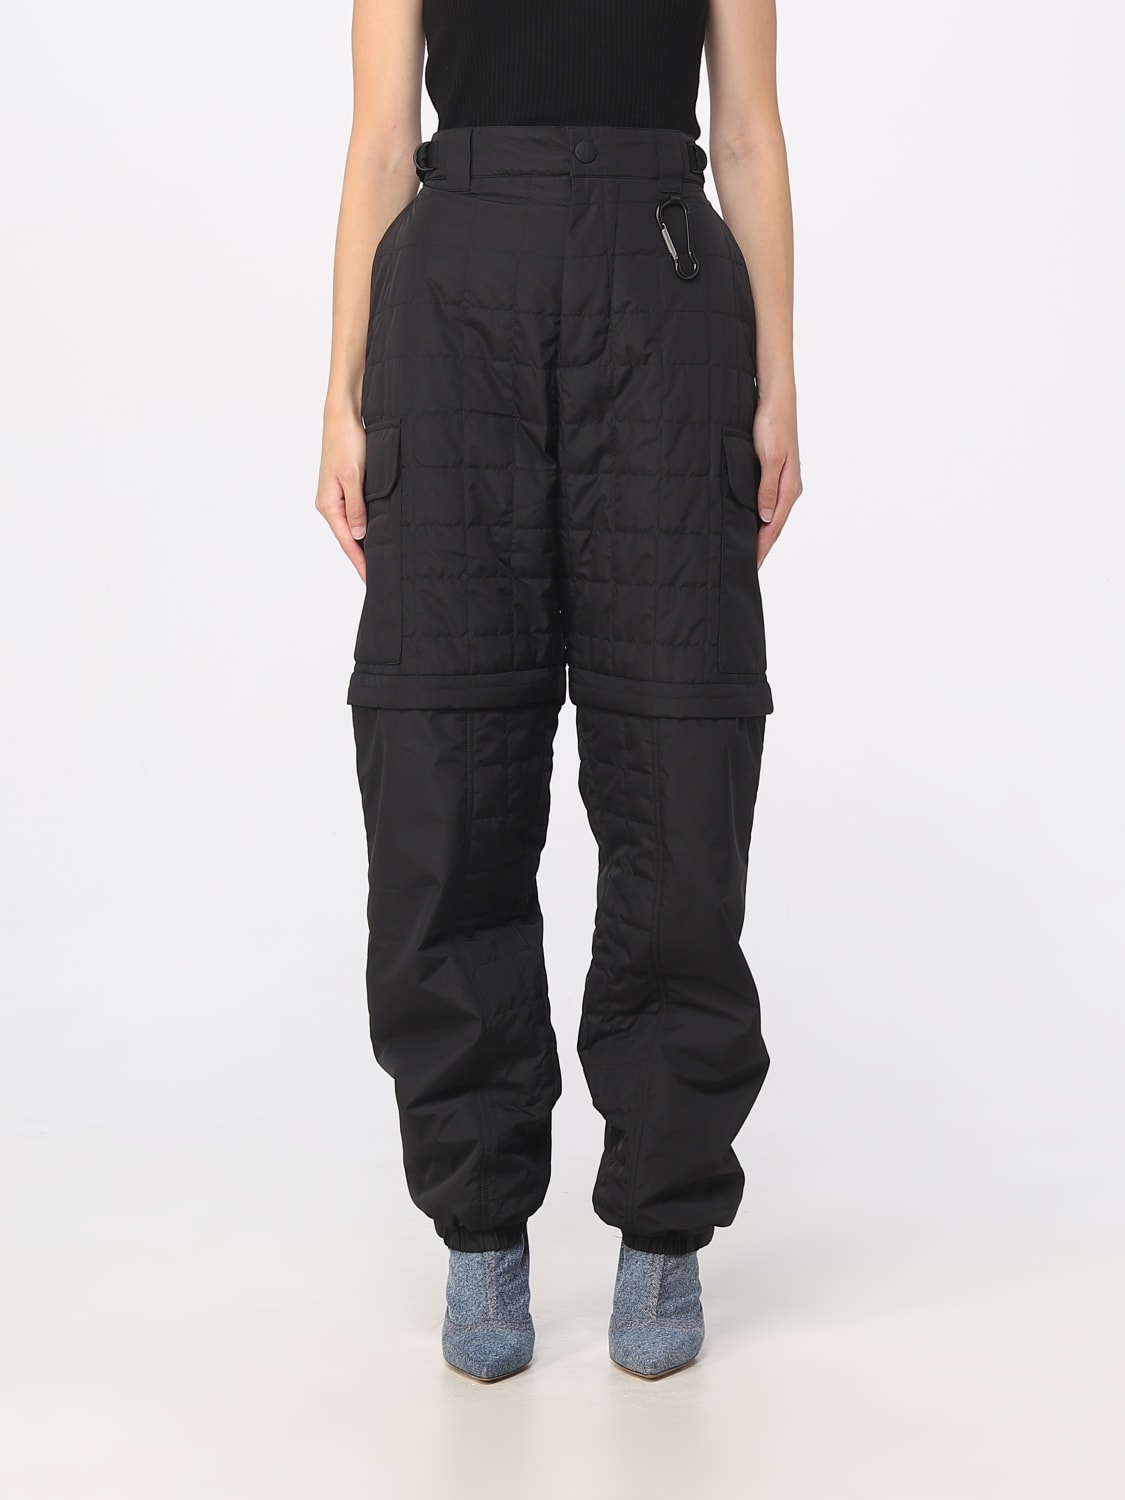 Buy Black Trousers & Pants for Women by Calvin Klein Jeans Online